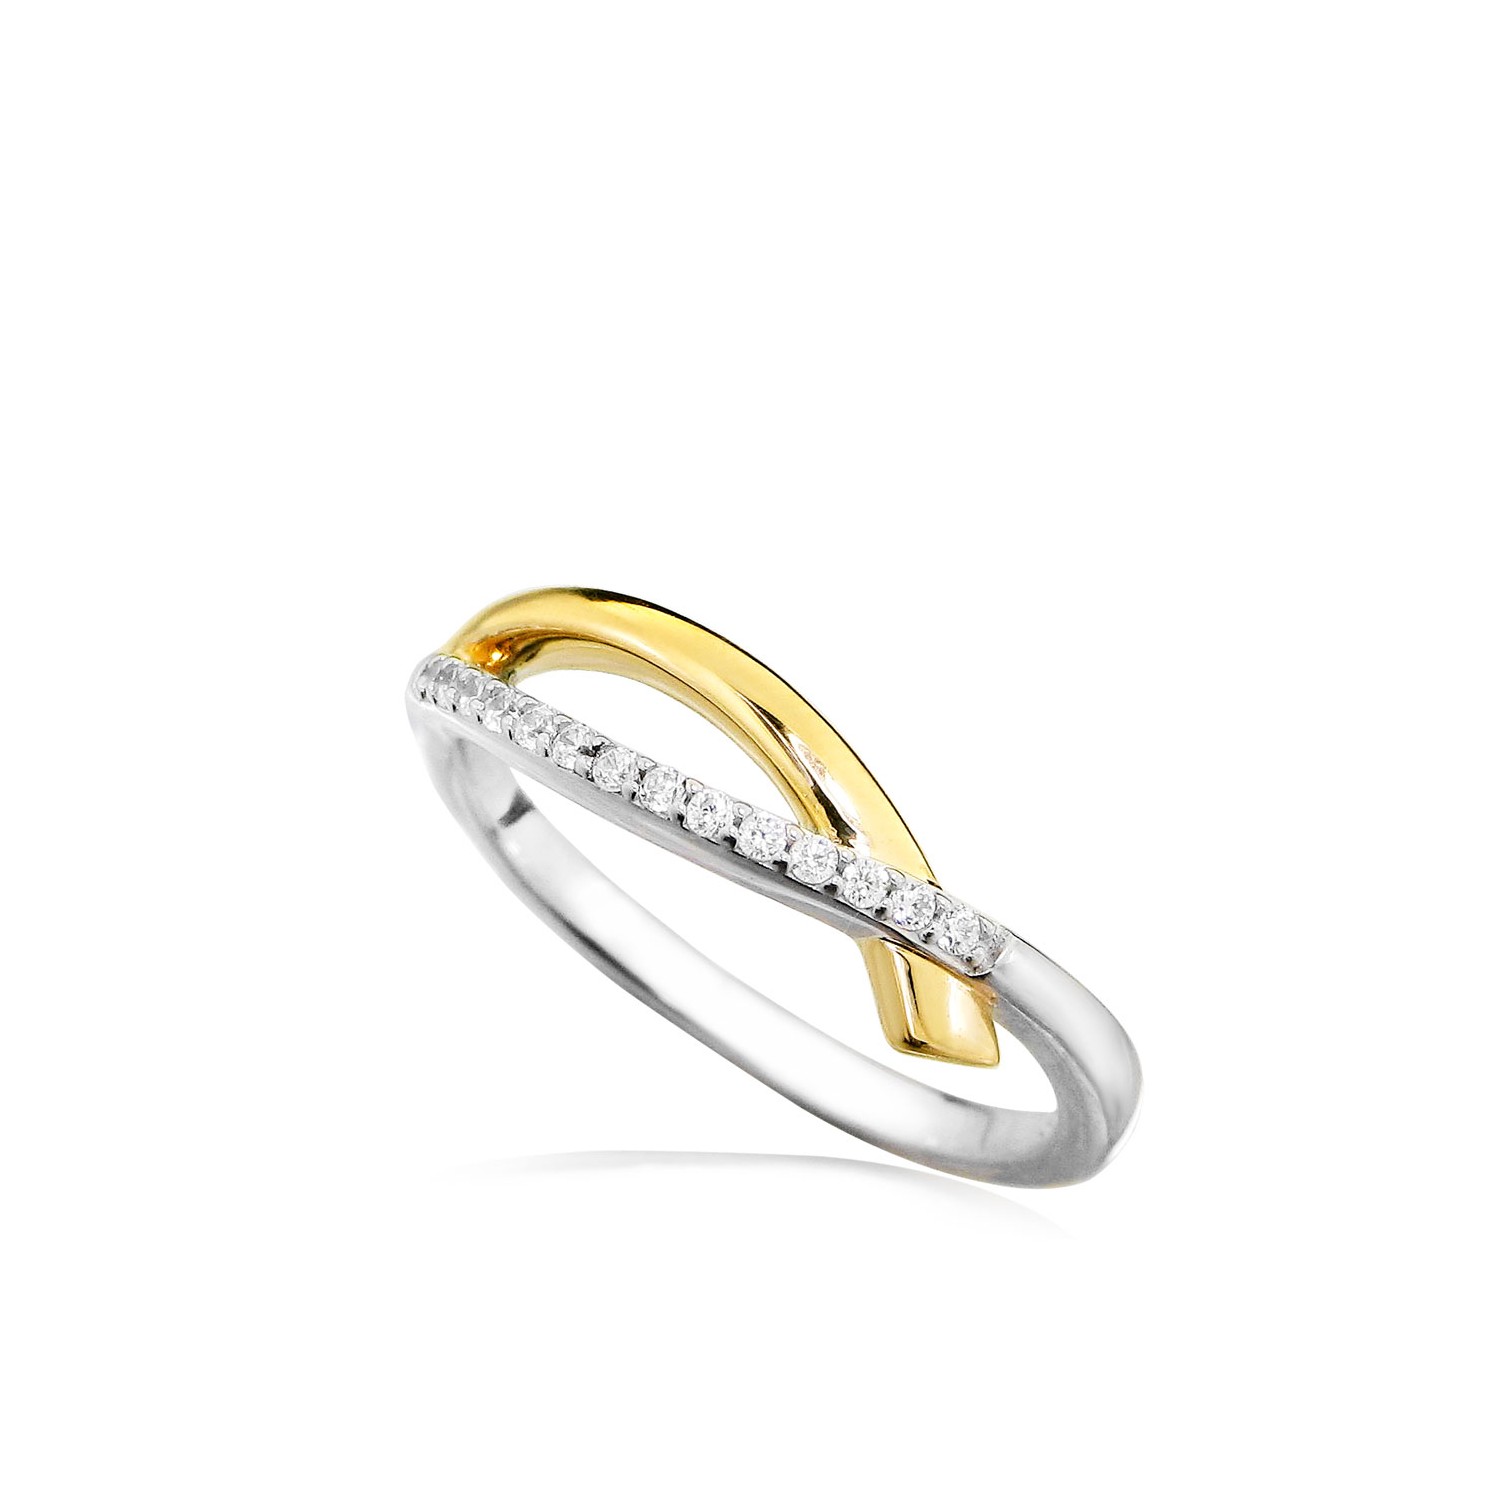 MOISS Moiss stříbrný prsten ADÉLA BICOLOR GOLD R0000983 Velikost 57 mm R0000985